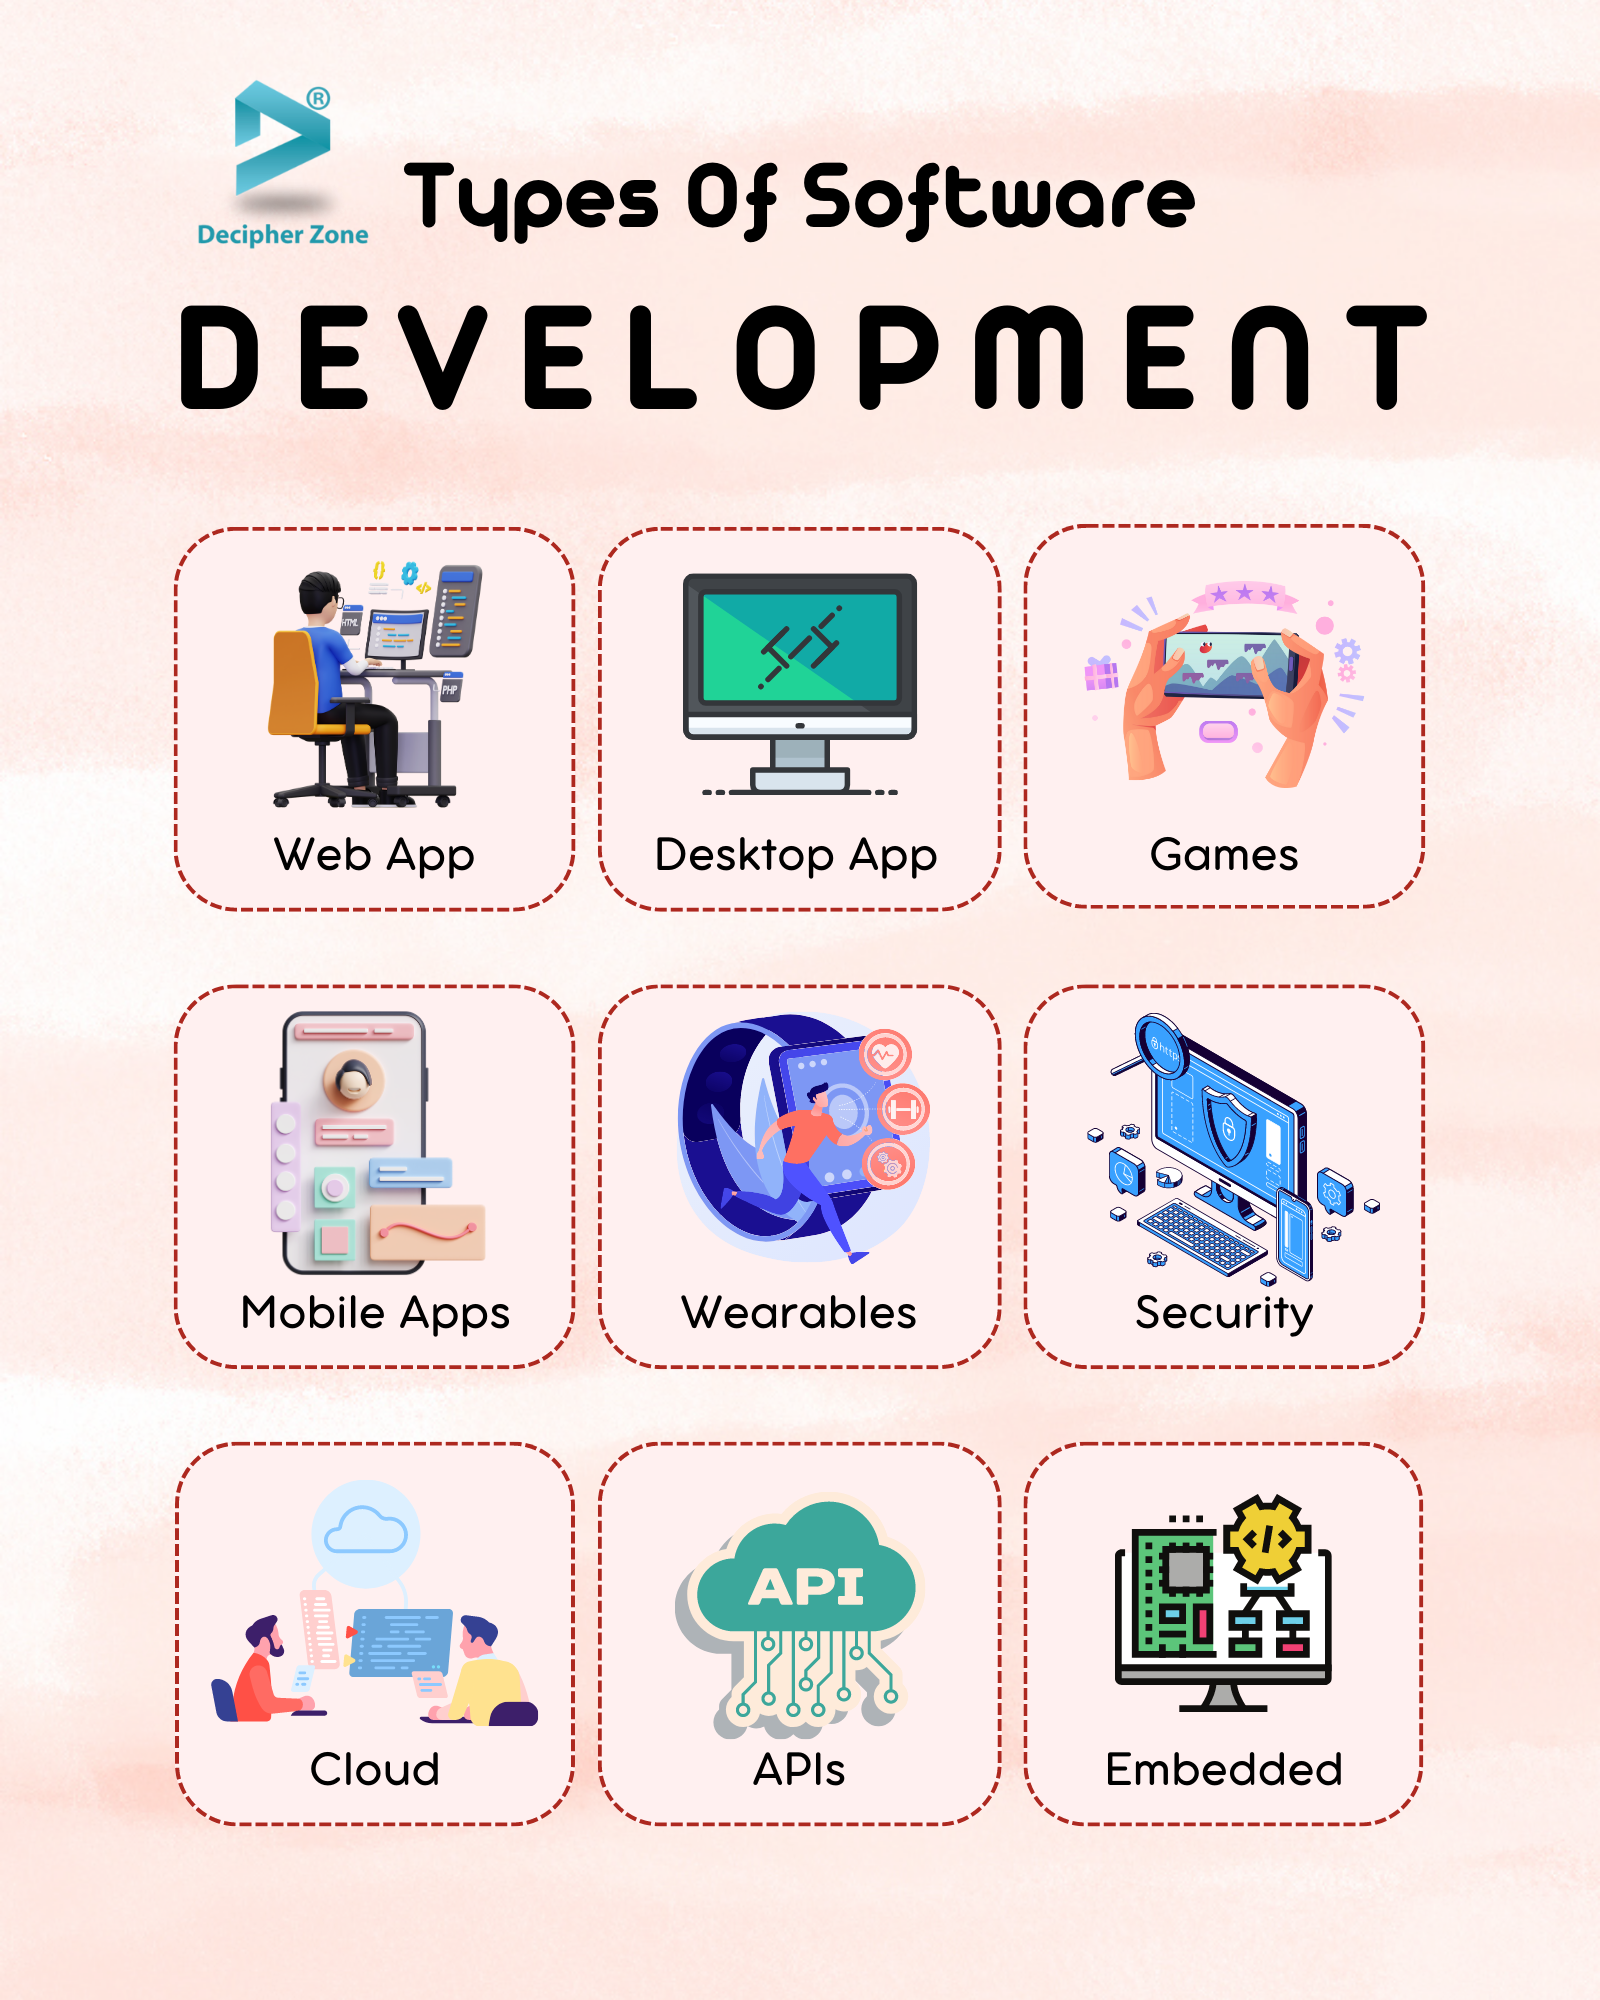 Types of Software Development